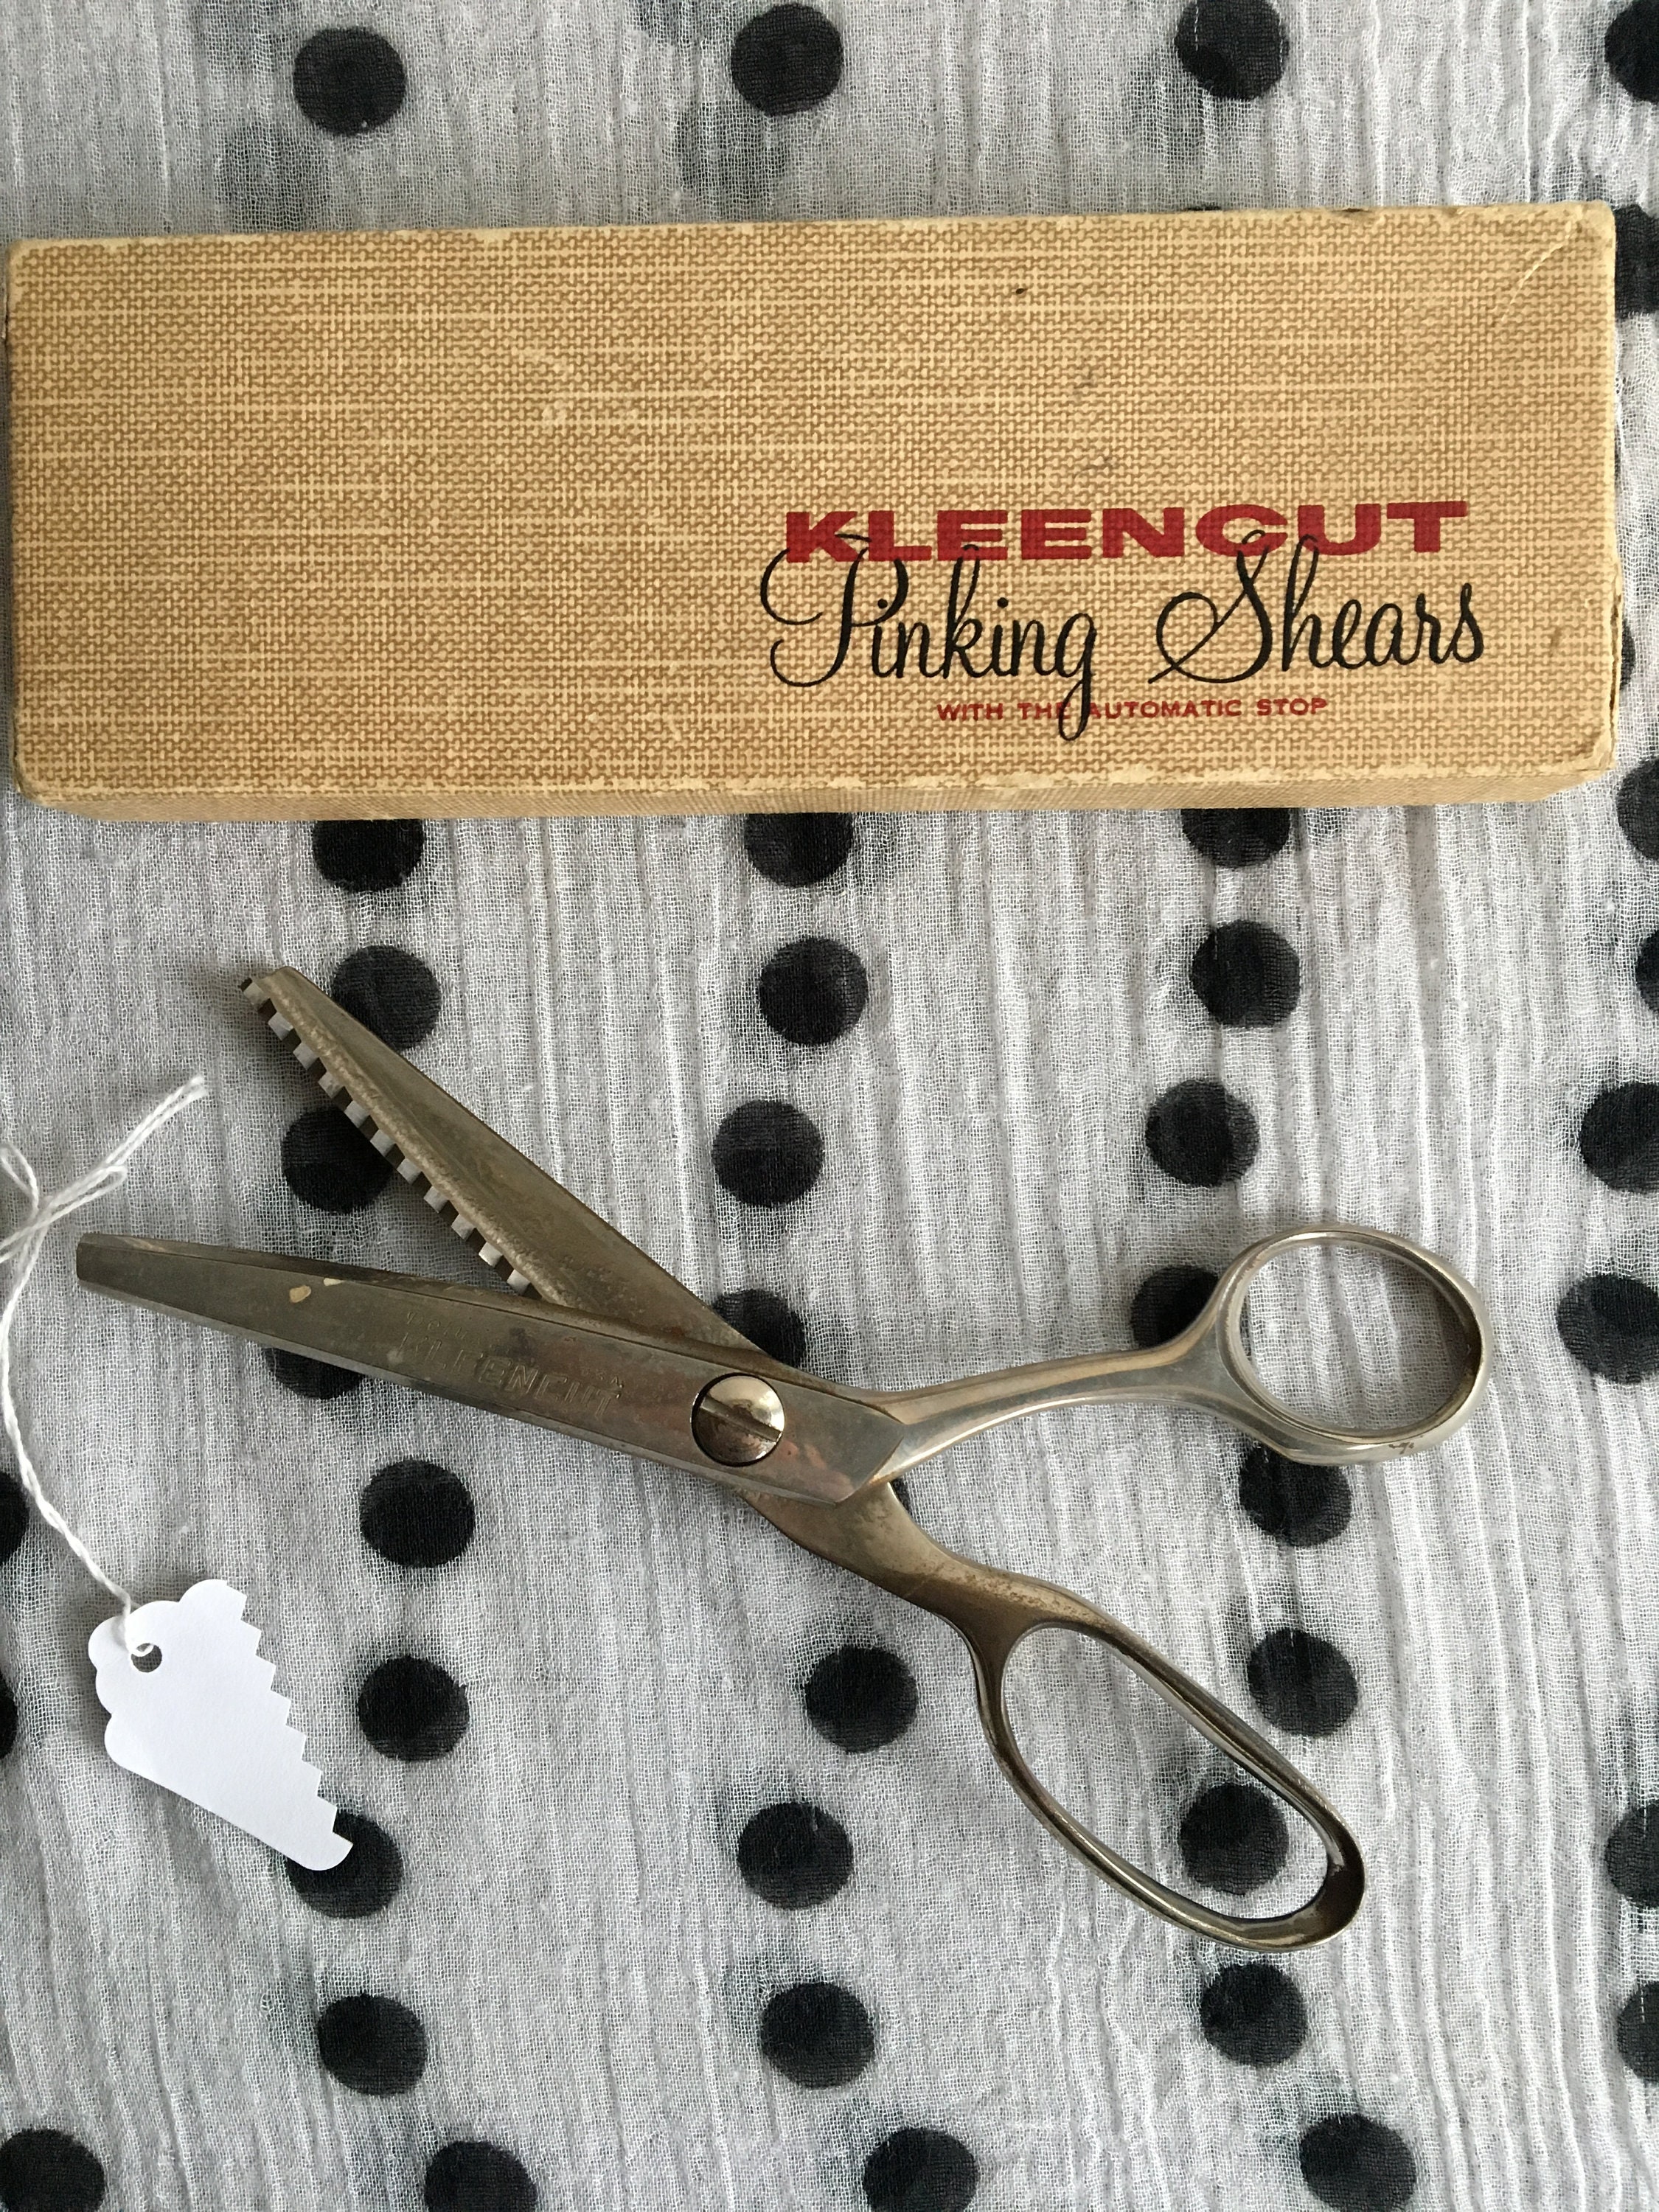 Vintage Black Handle Scissors Pair of Old Scissors Sewing Shears Sewing  Fabric Scissors Craft Scissors Deluxe Kleencut Pinking 